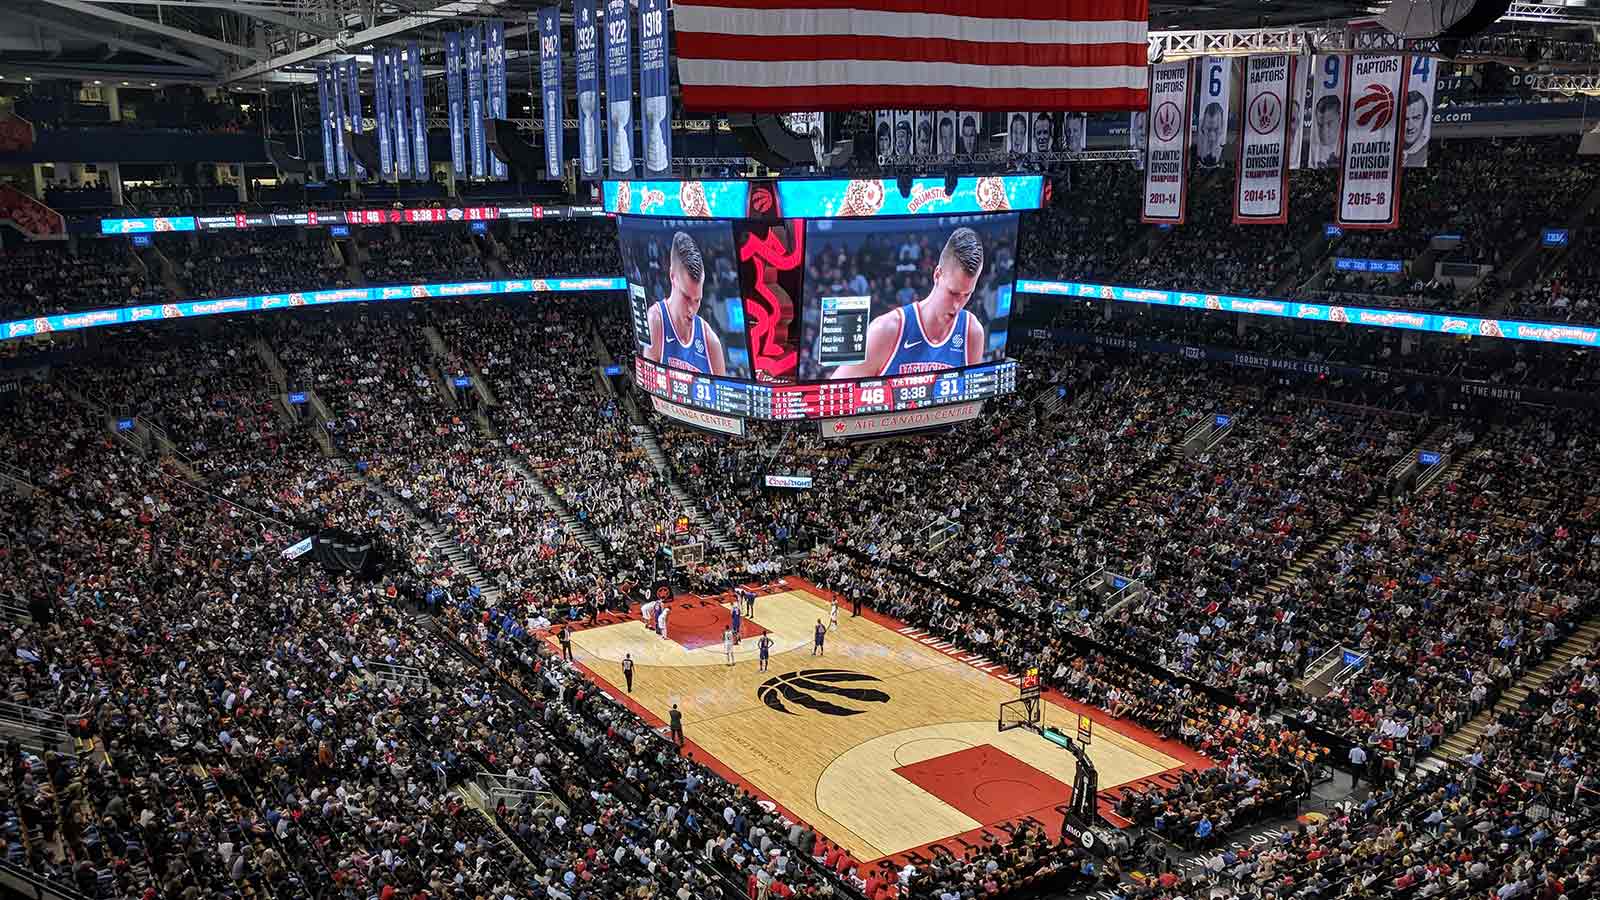 Toronto Raptors stadium on game day